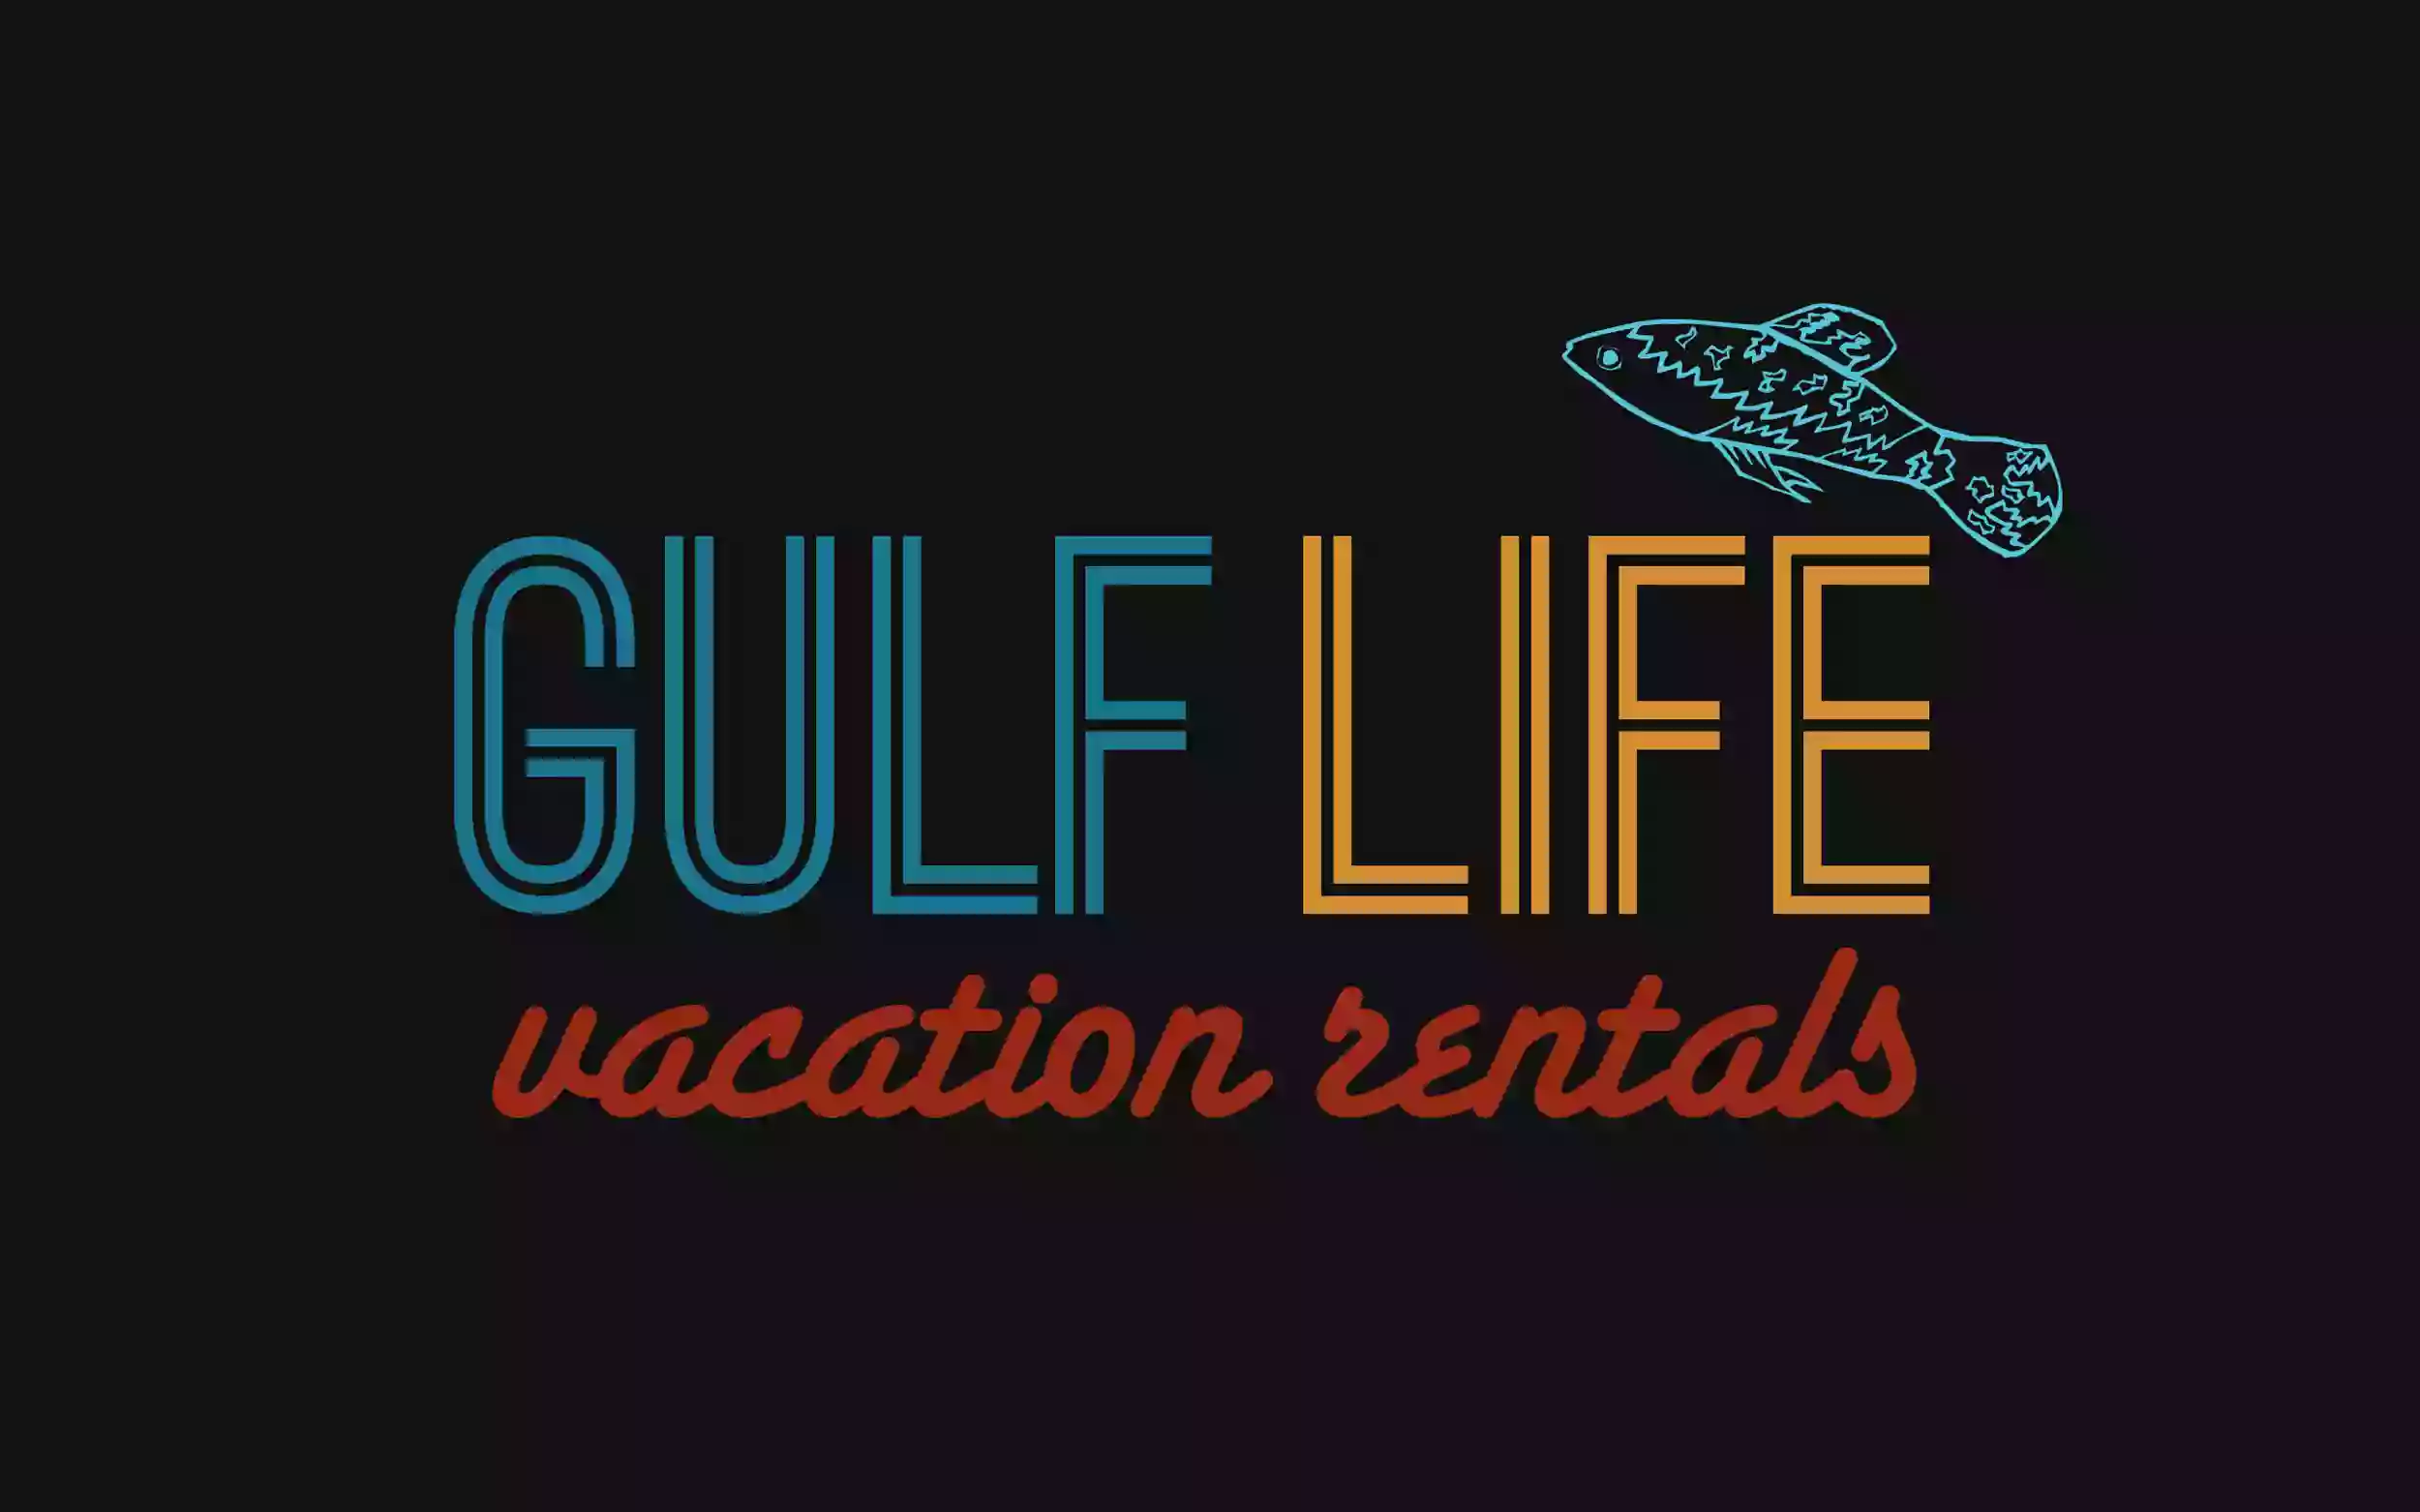 Gulf Life Vacations